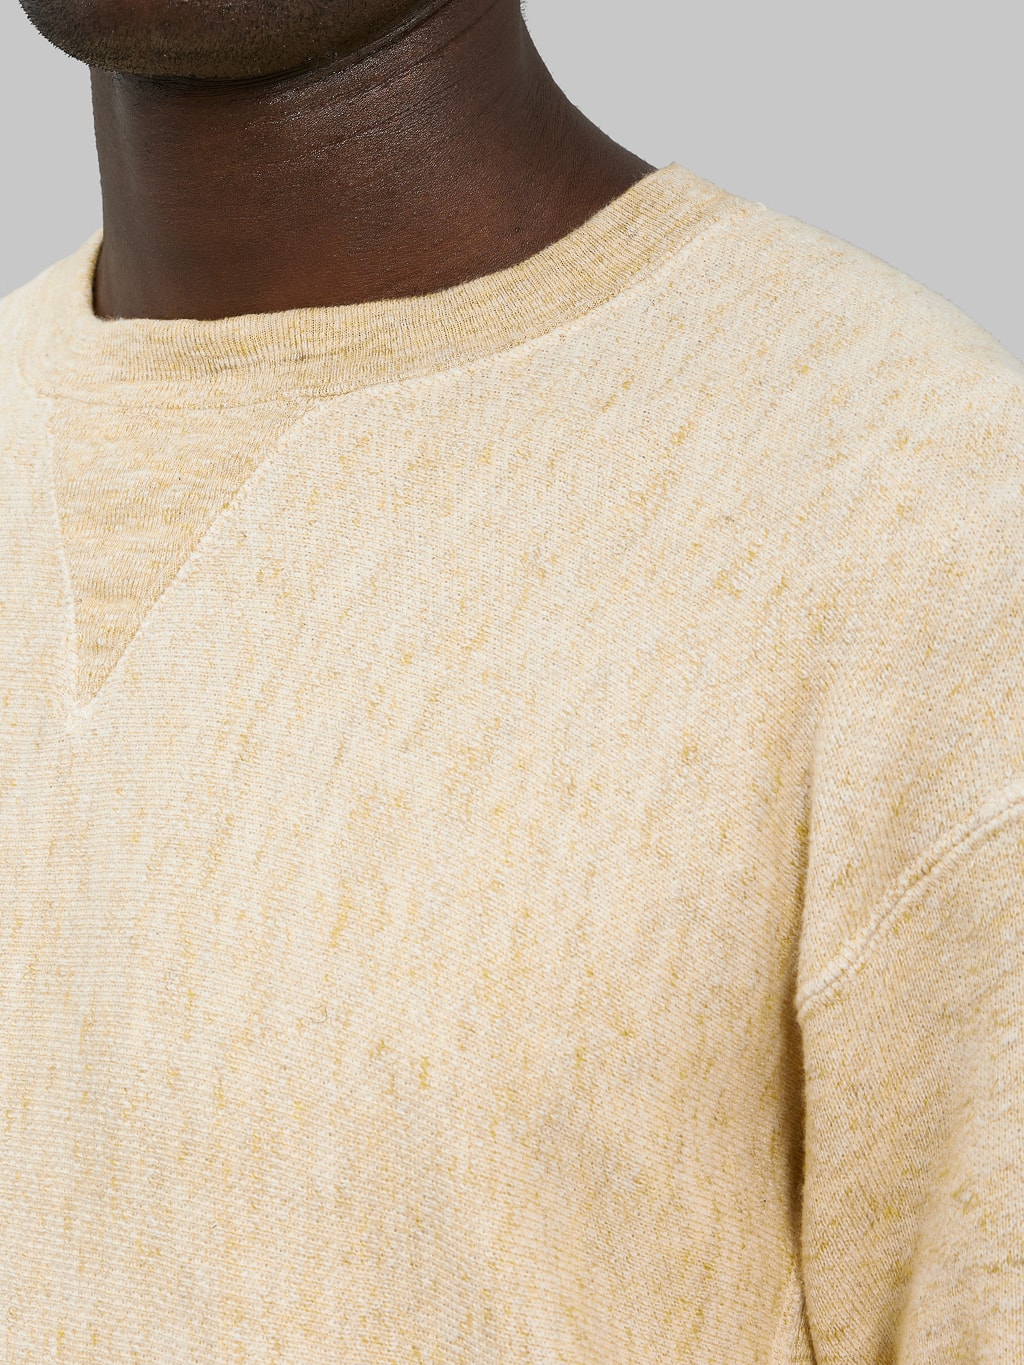 loop and weft big loopback fleece side panel sweatshirt mustard details